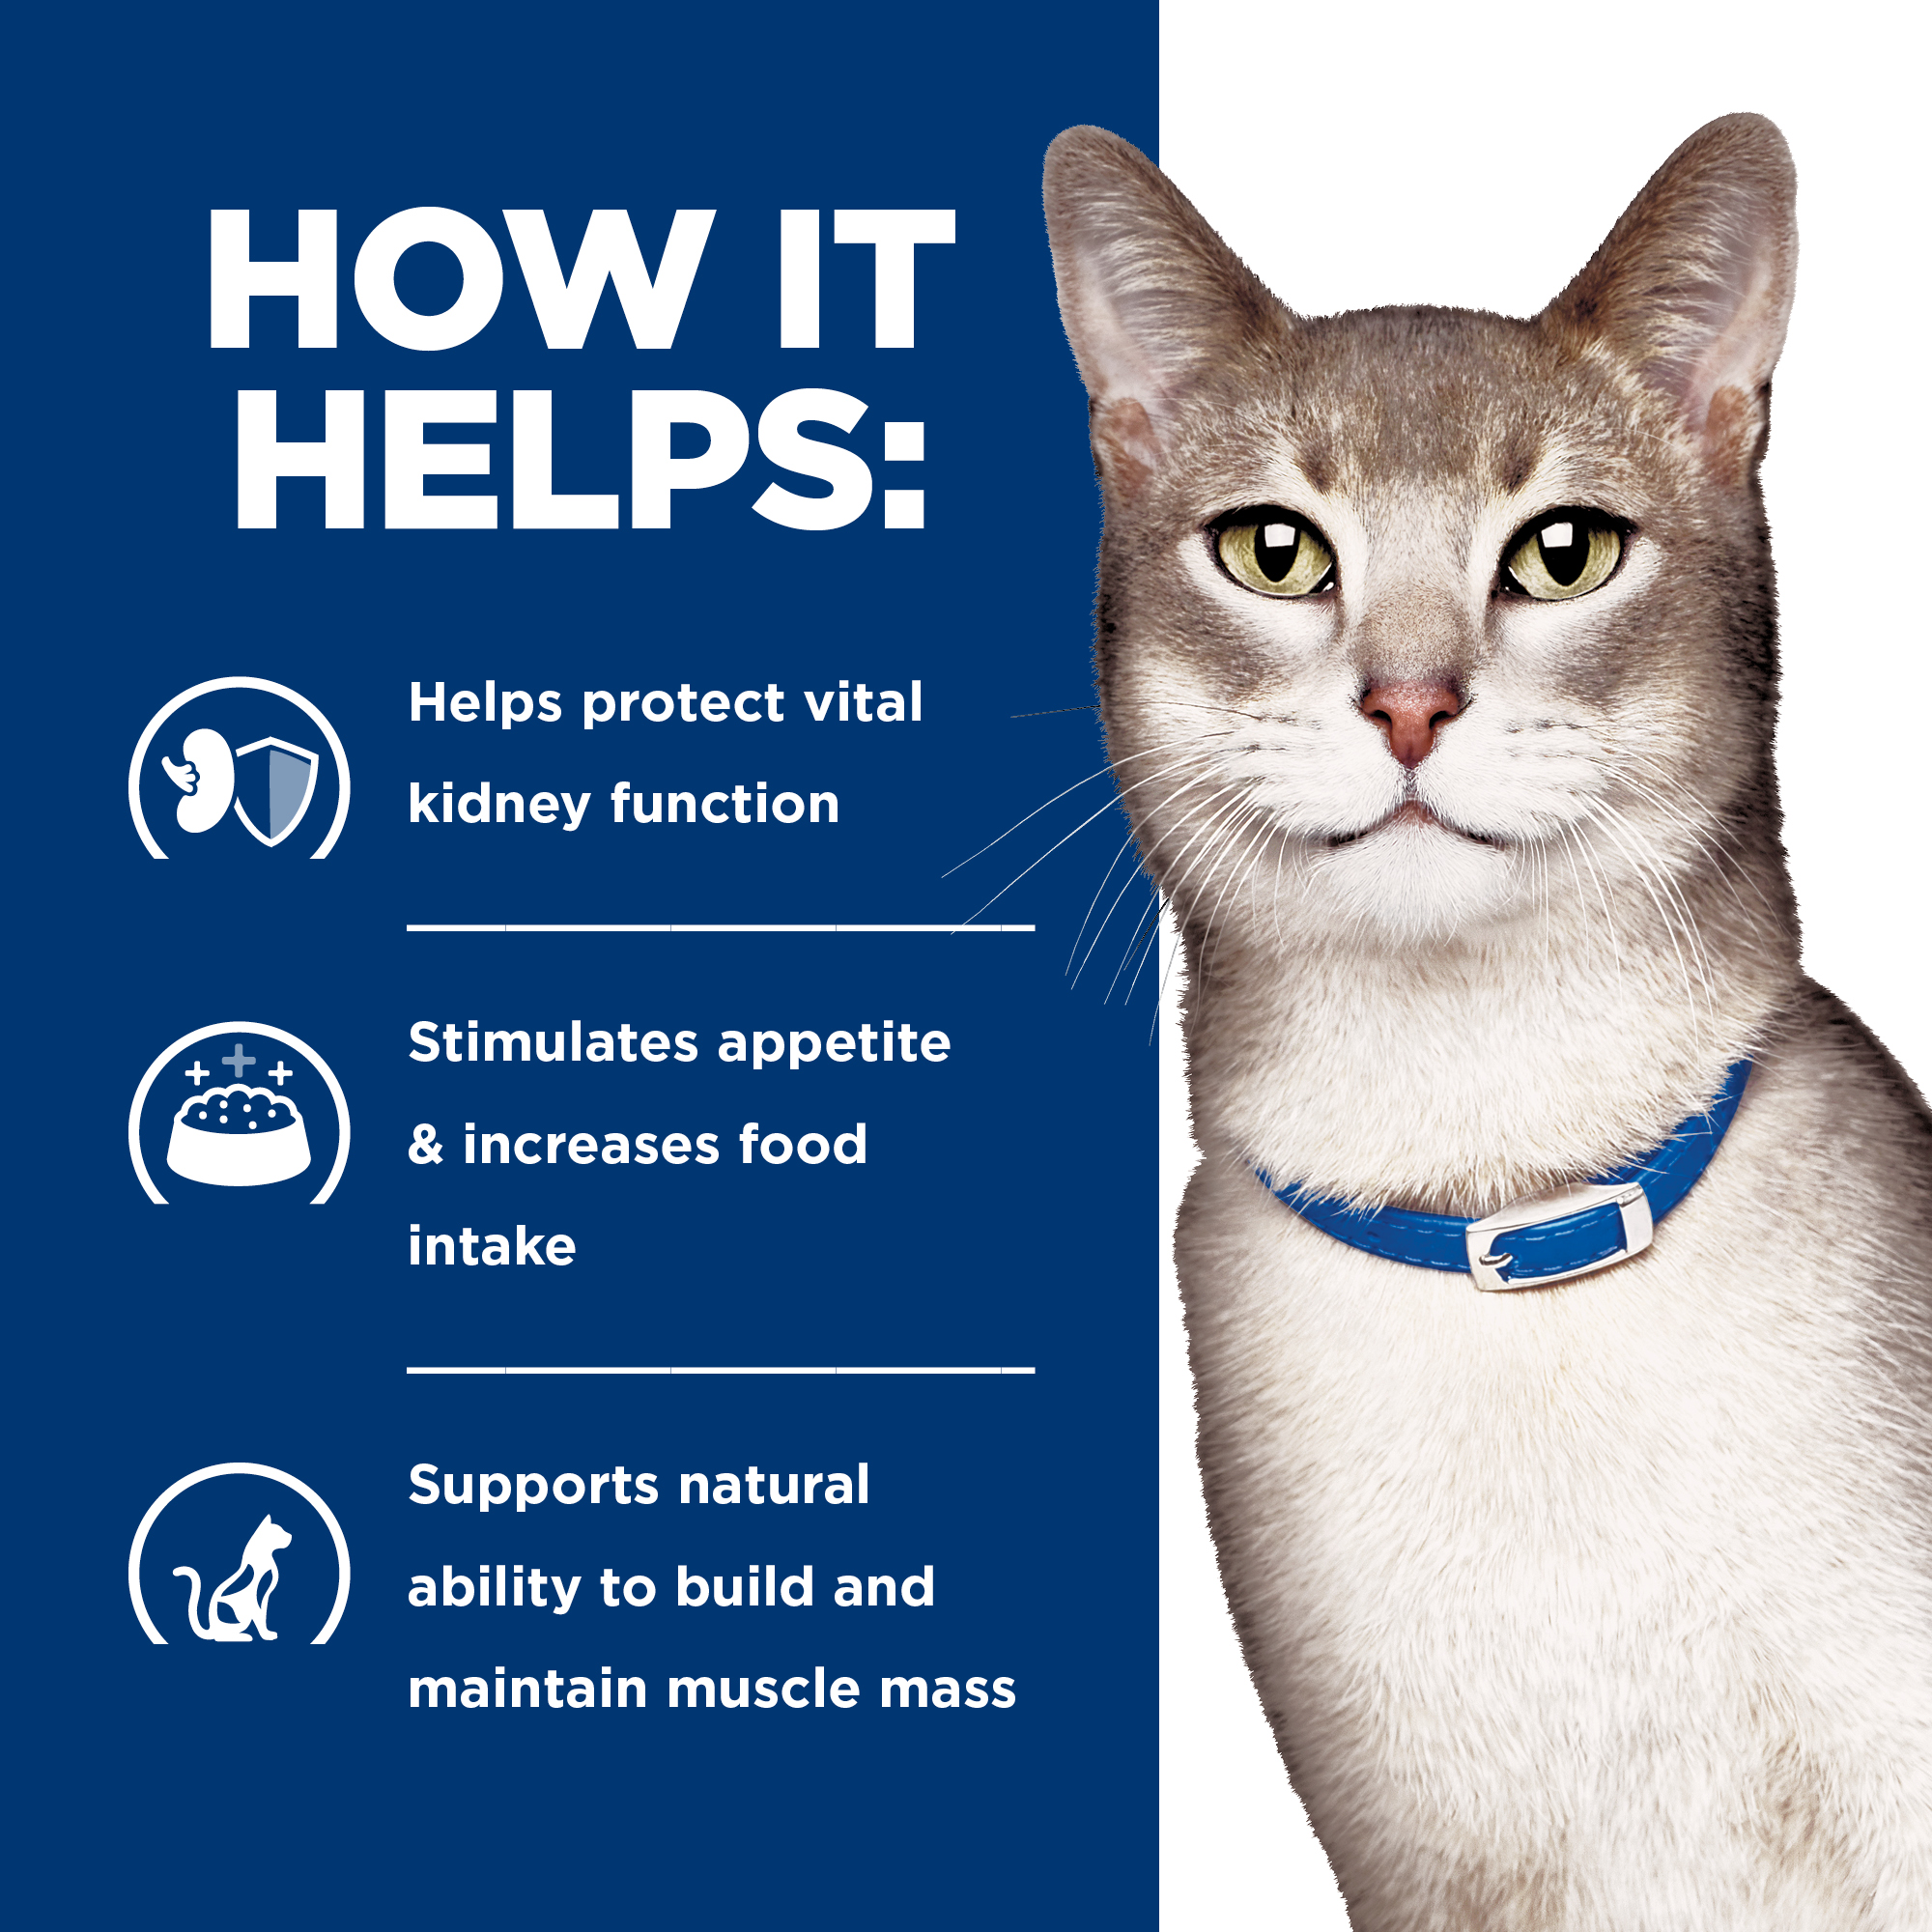 Hill's™ Prescription Diet™ k/d™ Kidney Care Feline with Chicken Canned